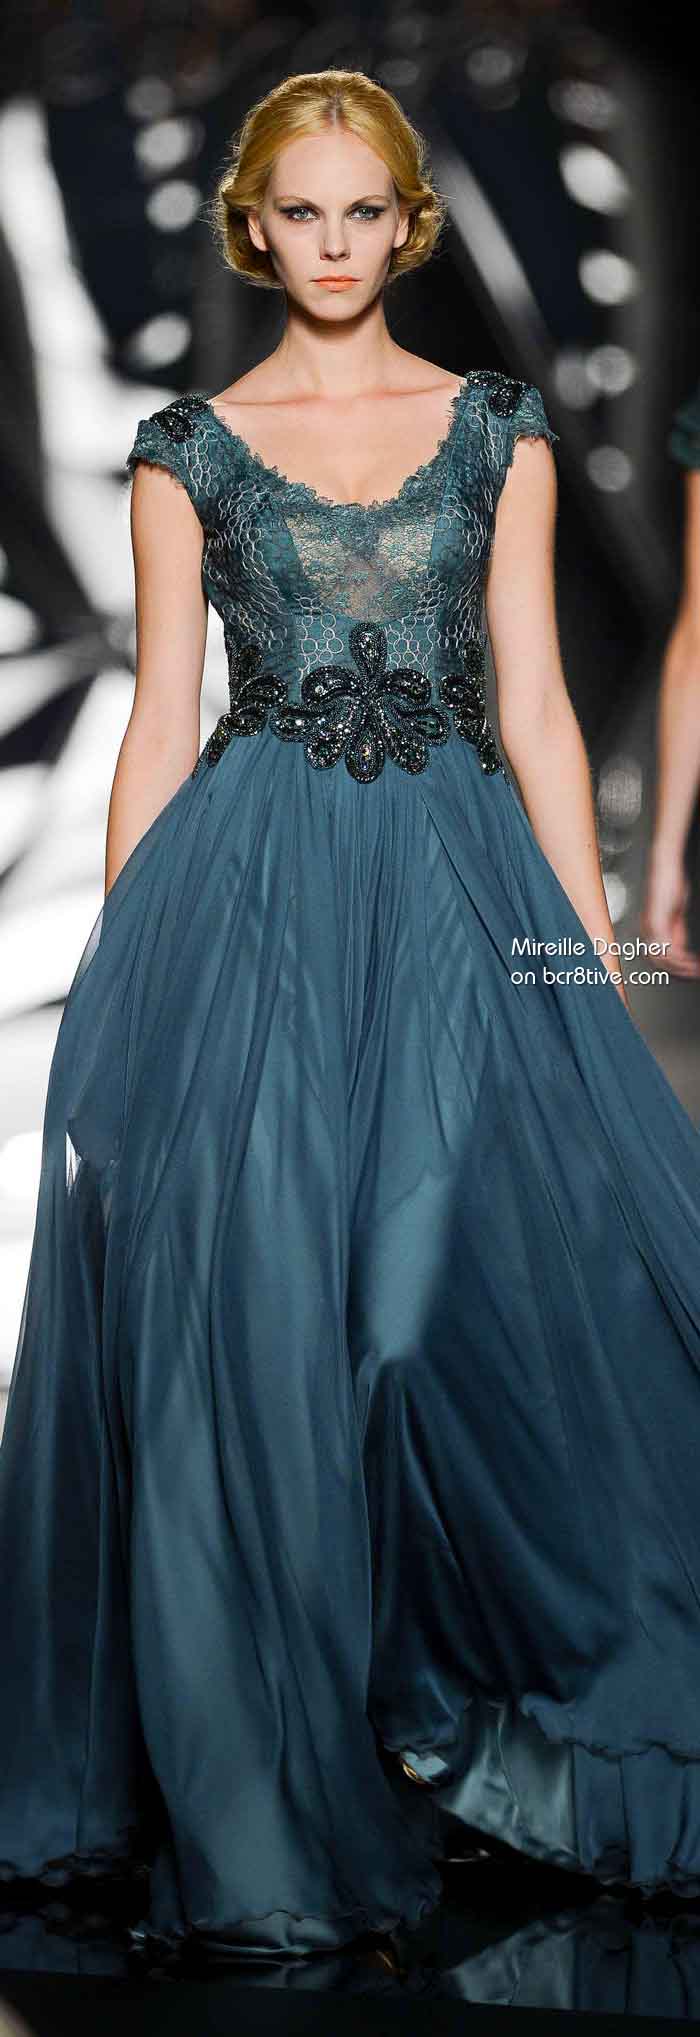 Mireille Dagher Fall Winter 2013-14 Haute Couture